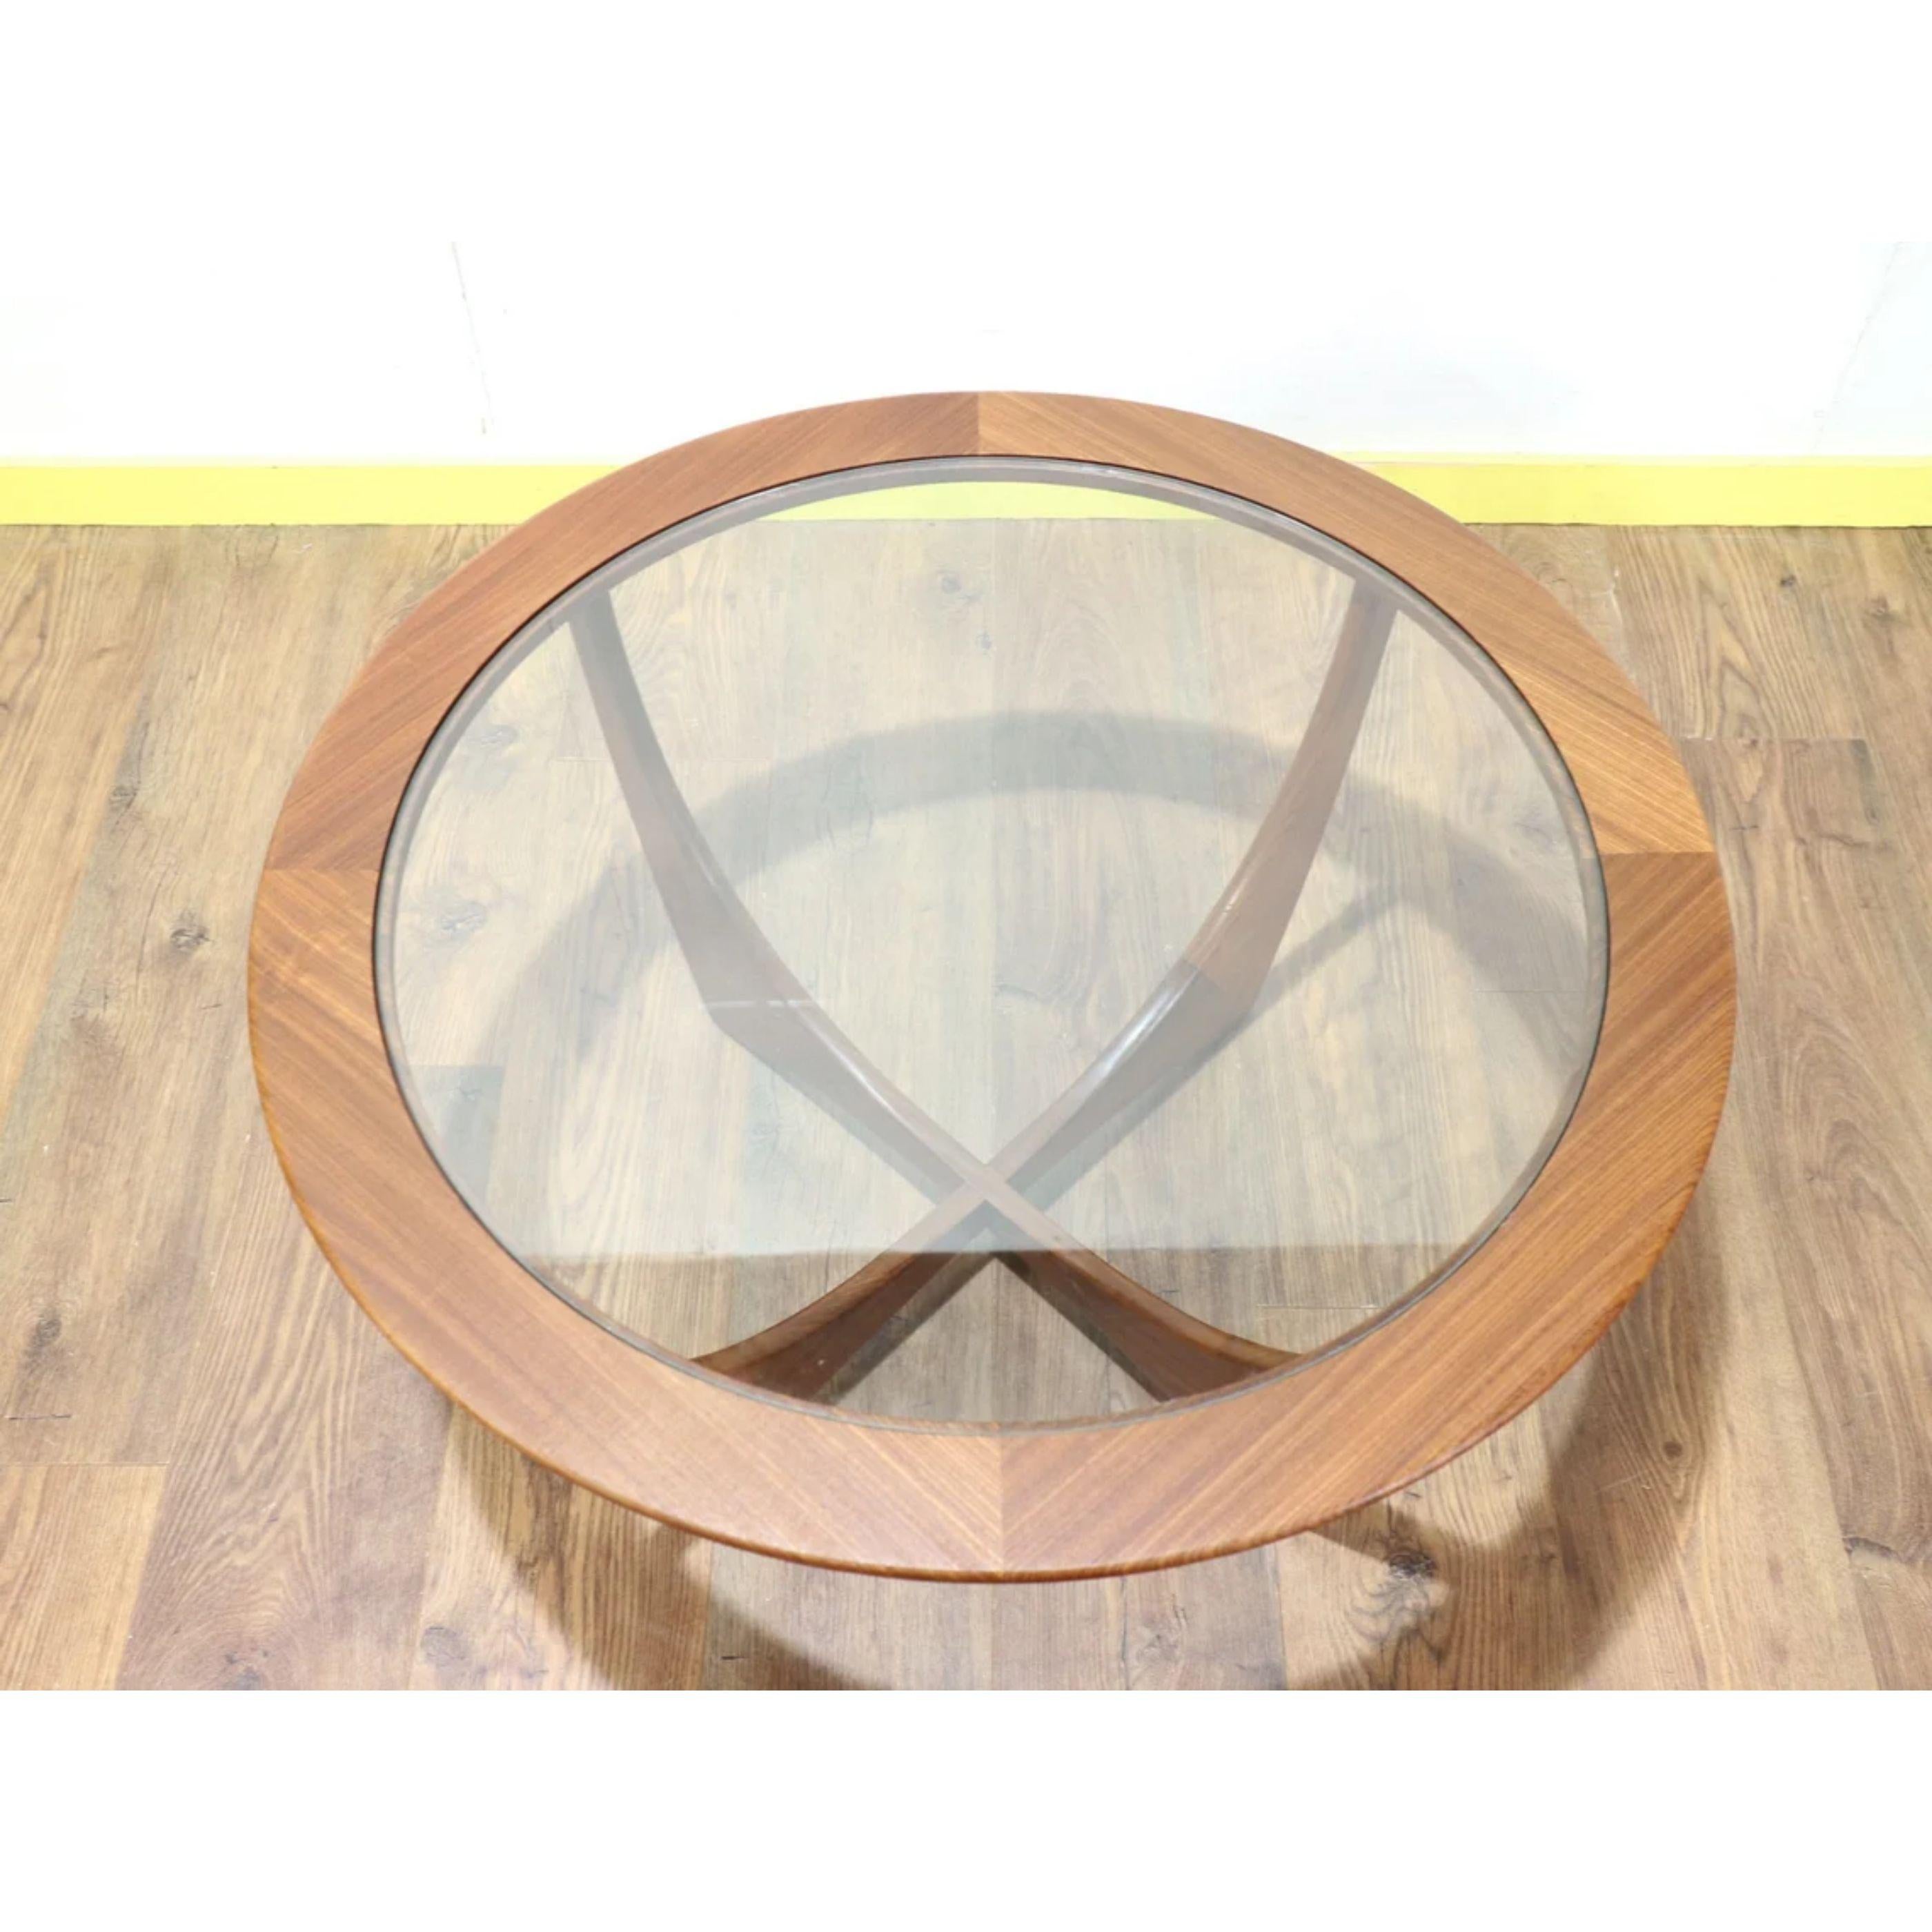 Glass Mid-Century Modern Astro Coffee Table by G Plan Teak Danish Style